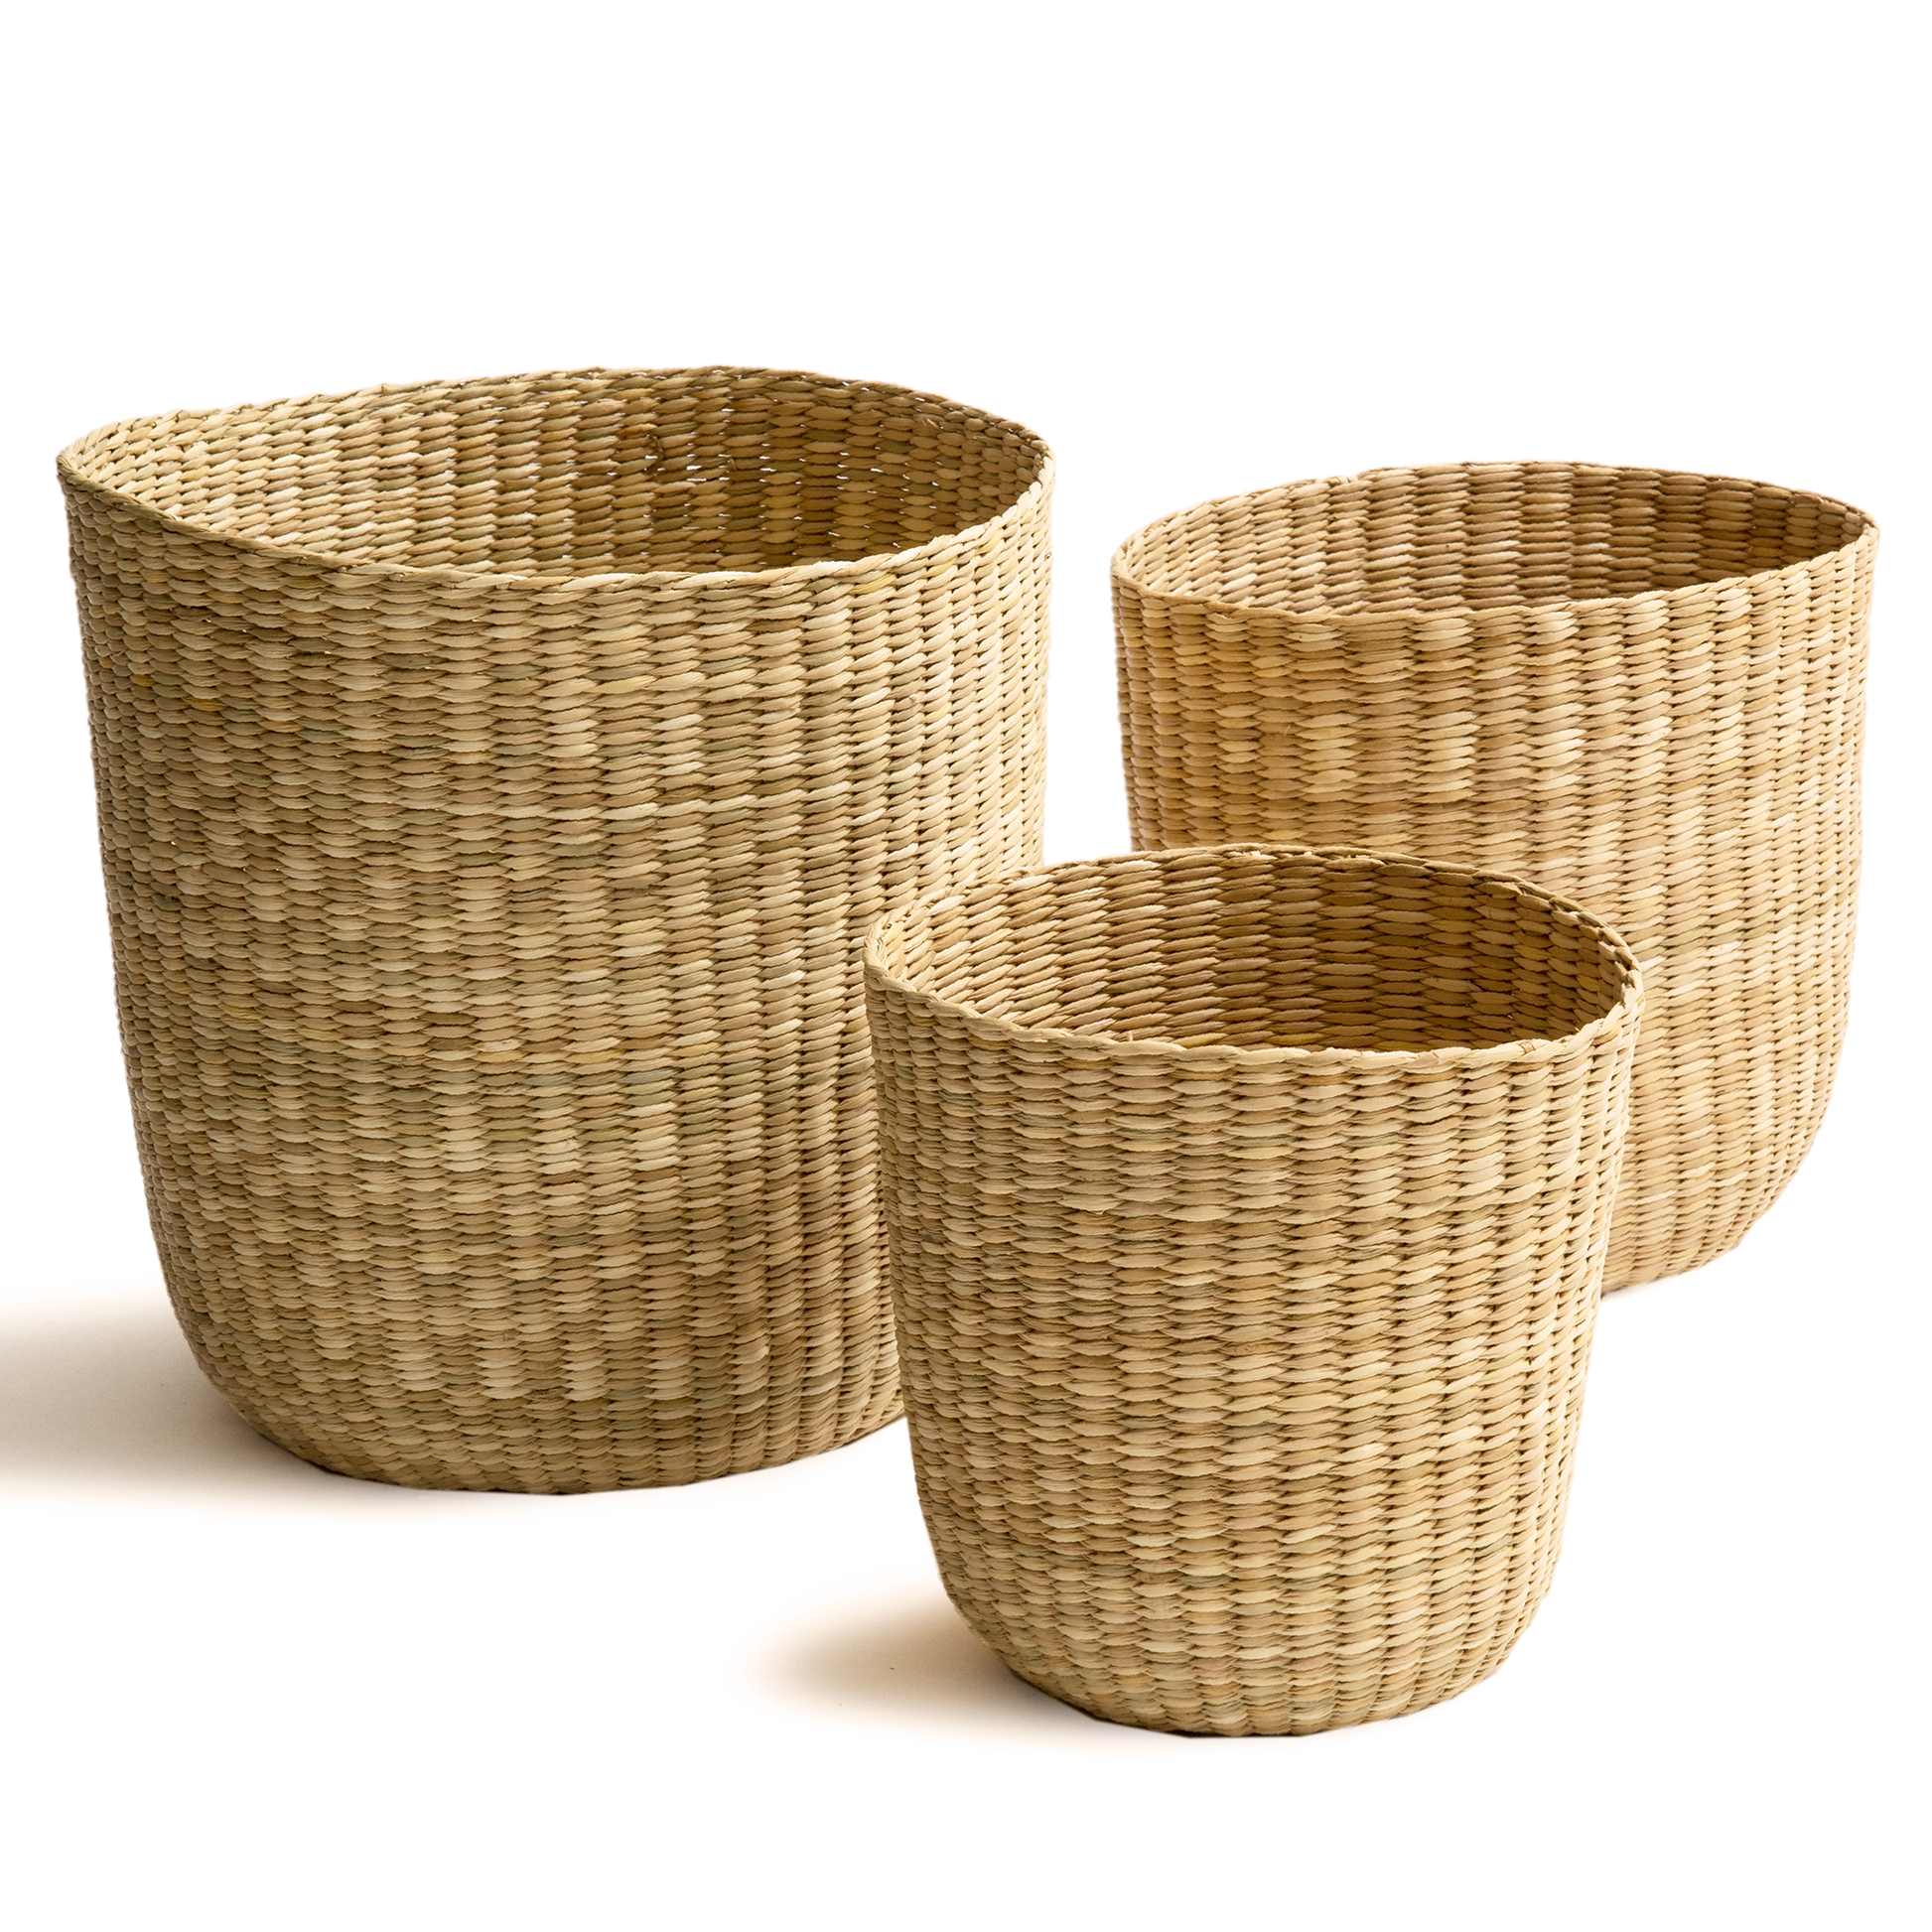 Intiearth Junco Nesting Baskets, Peruvian Home decor, woven natural handmade stacking basket trio